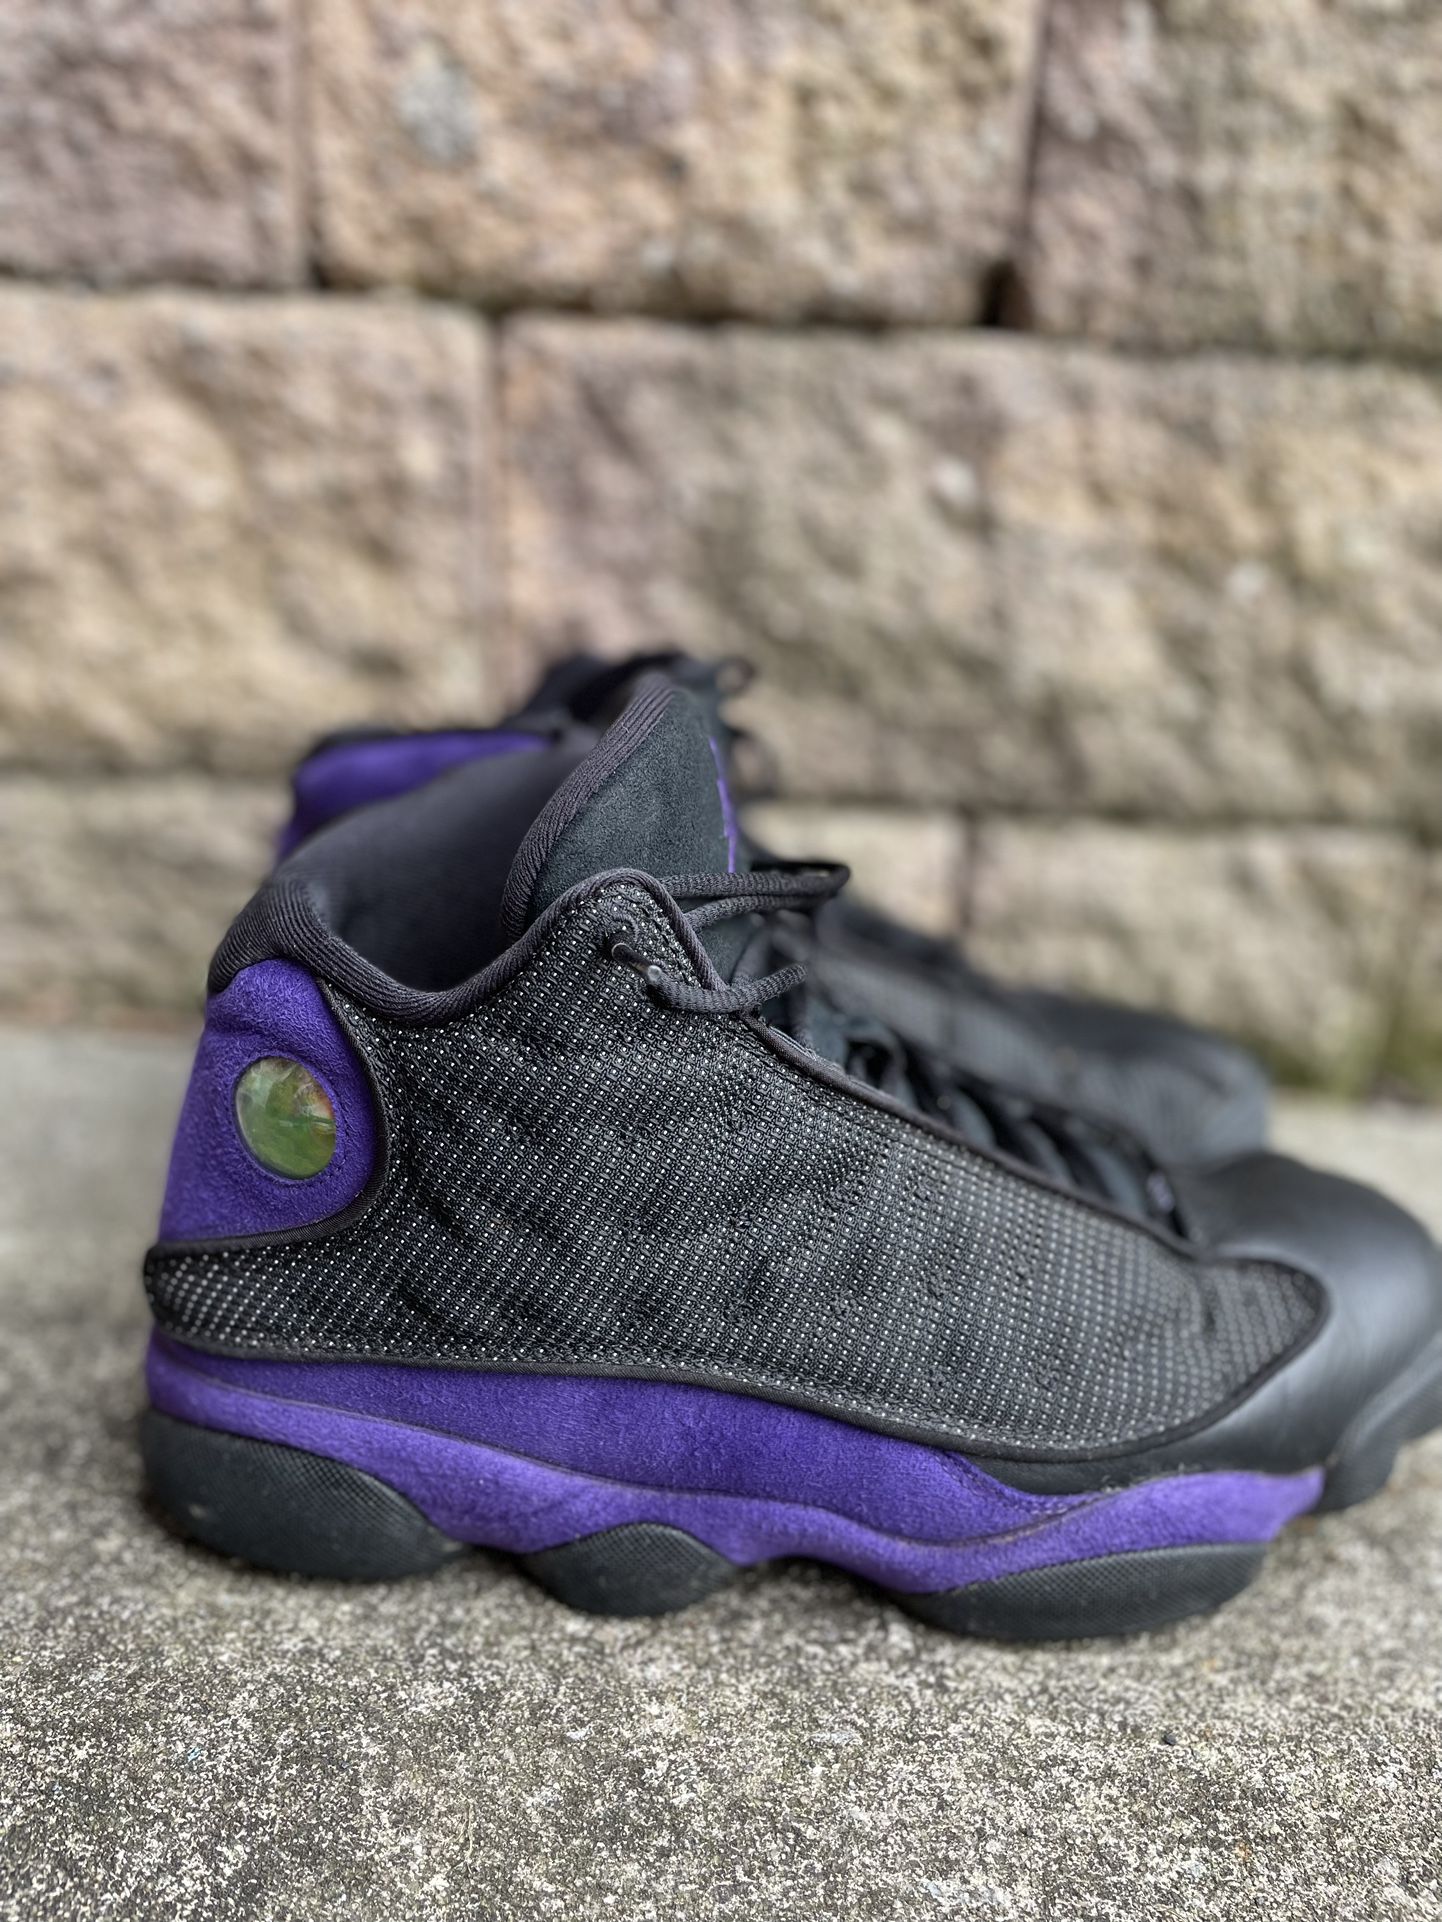 Jordan 13 Retro Court Purple Size 10.5